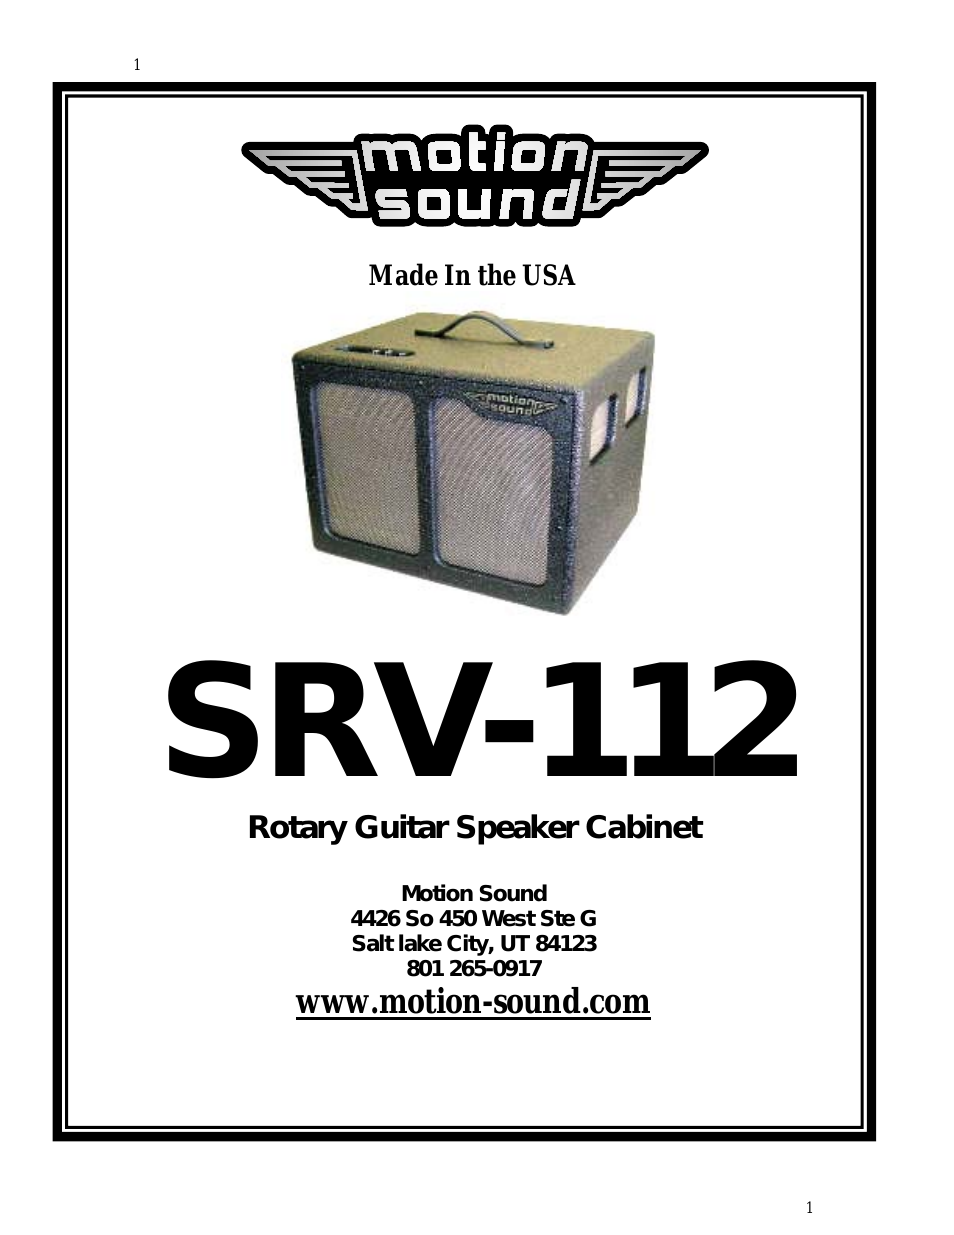 SRV-212